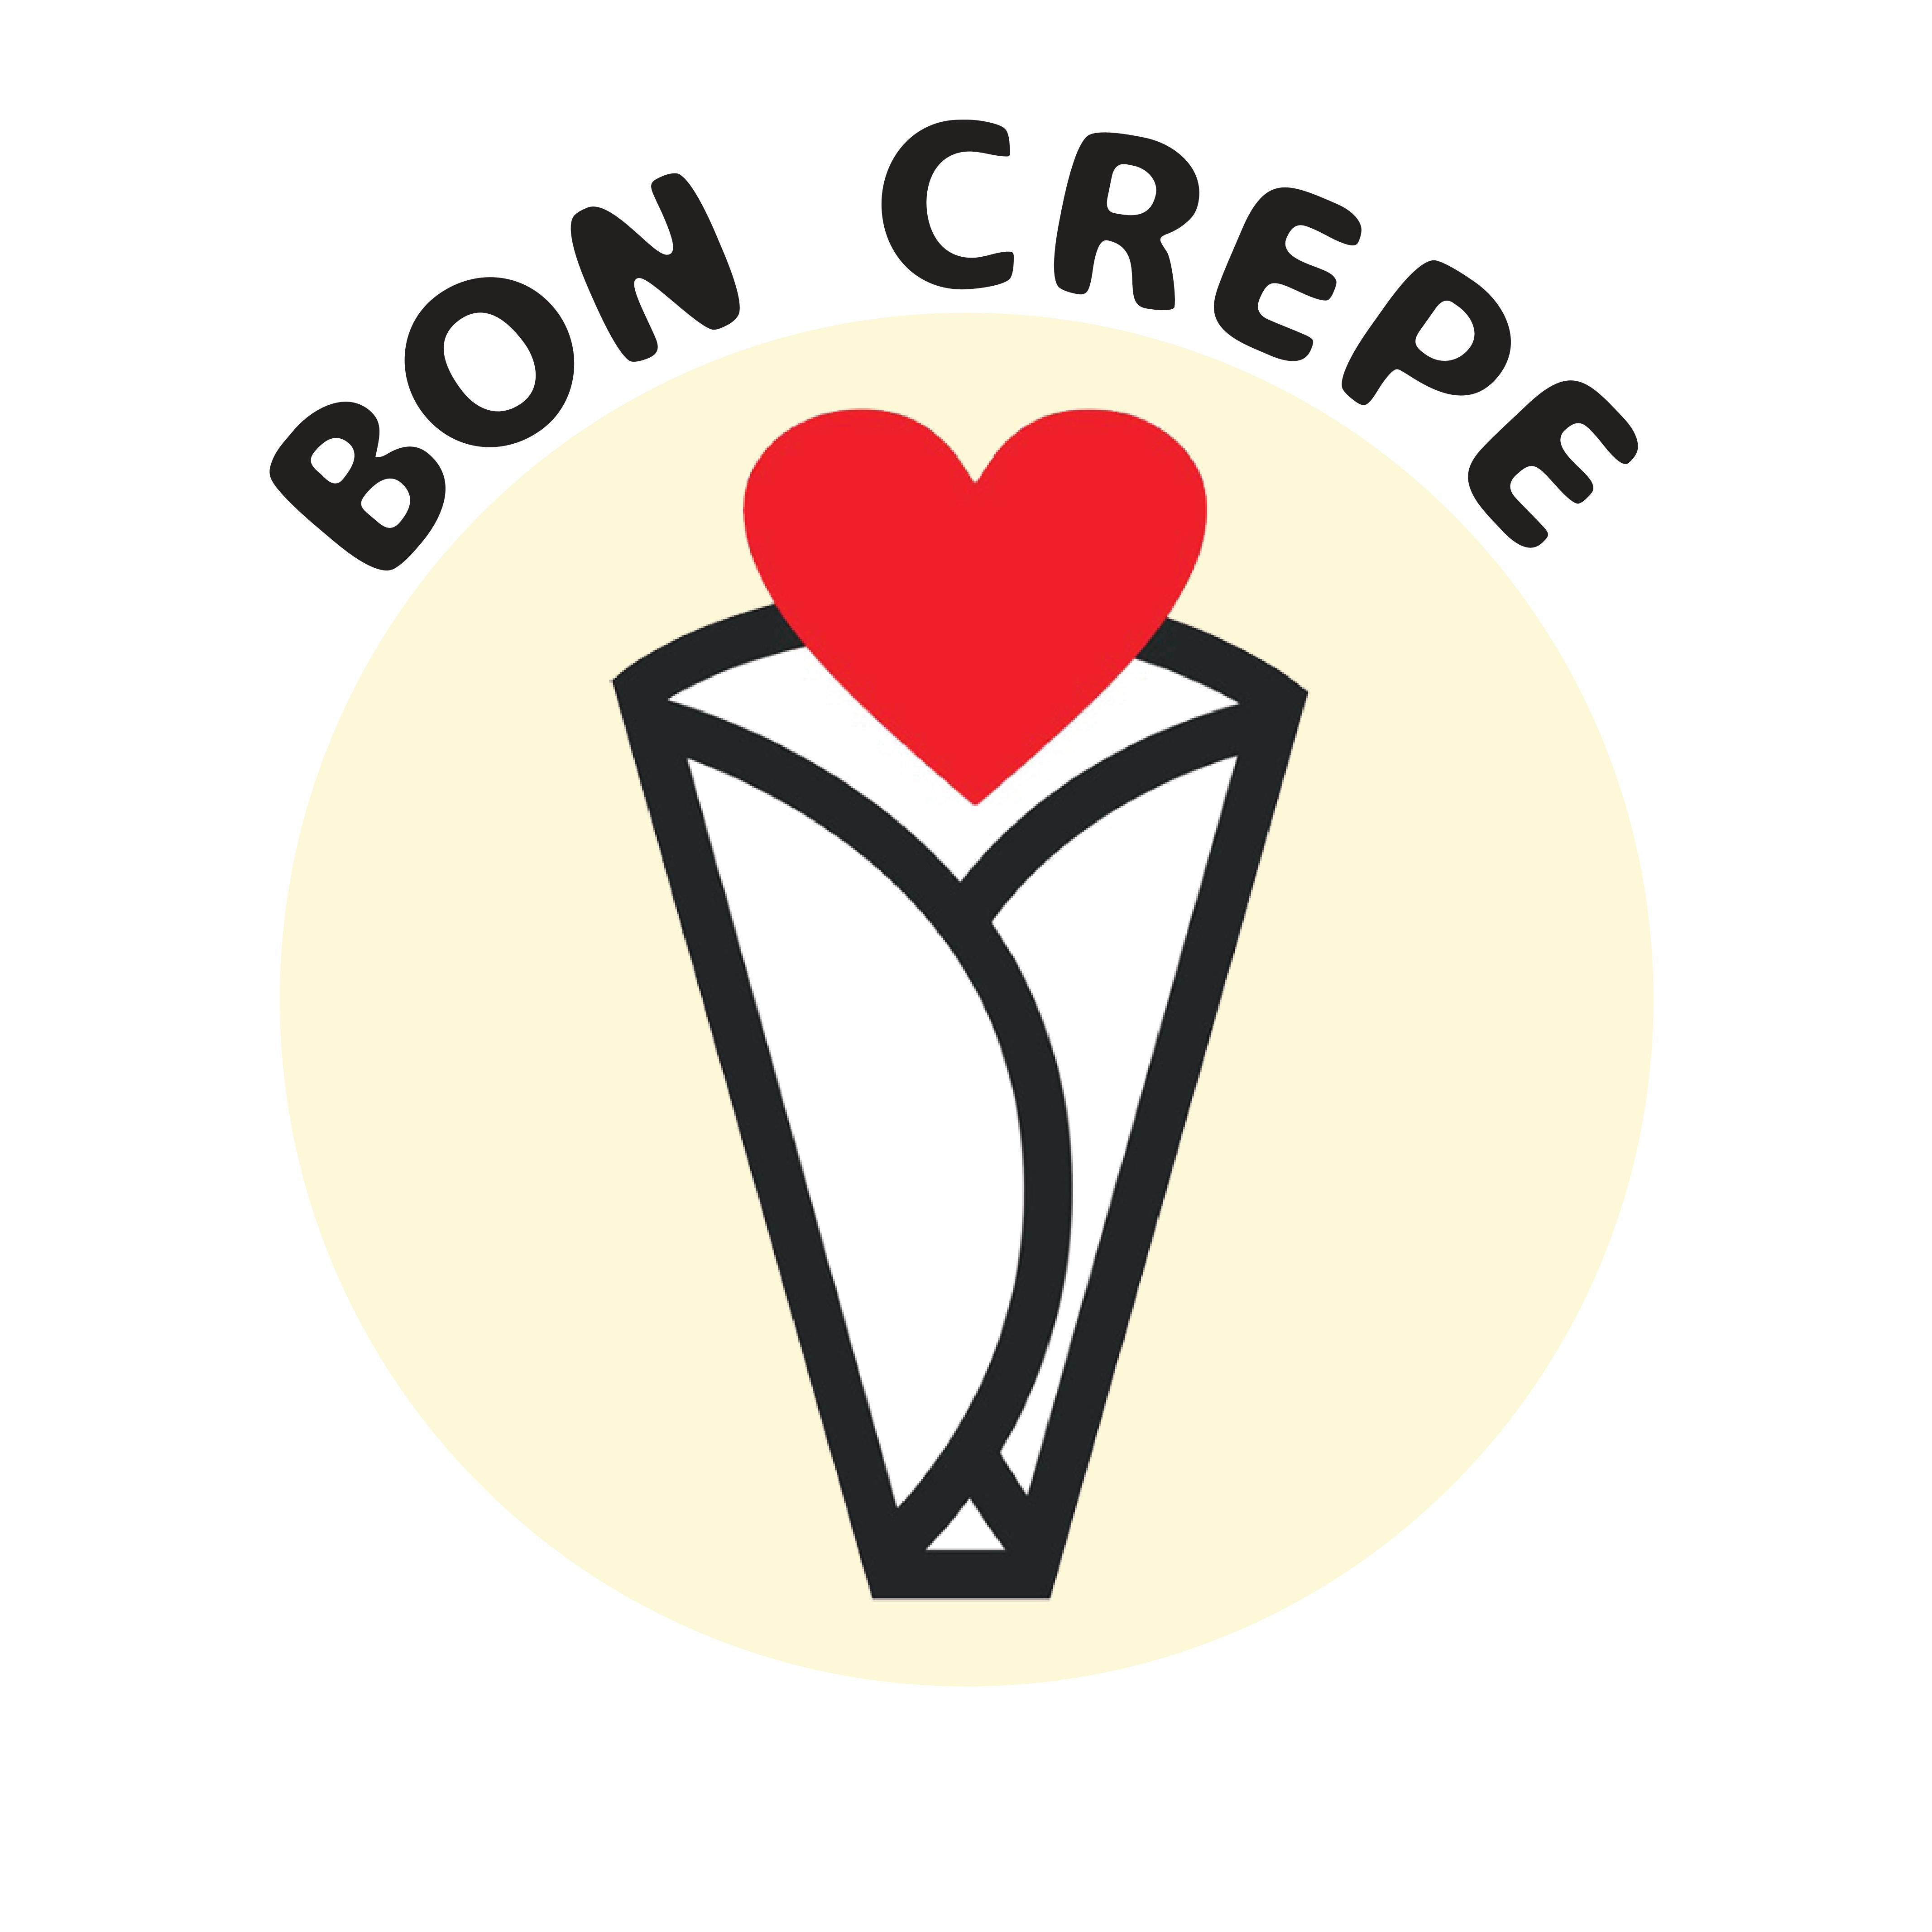 Head Crepe Cook - Bon Crepe / konbiniya Japan Centre イメージ画像